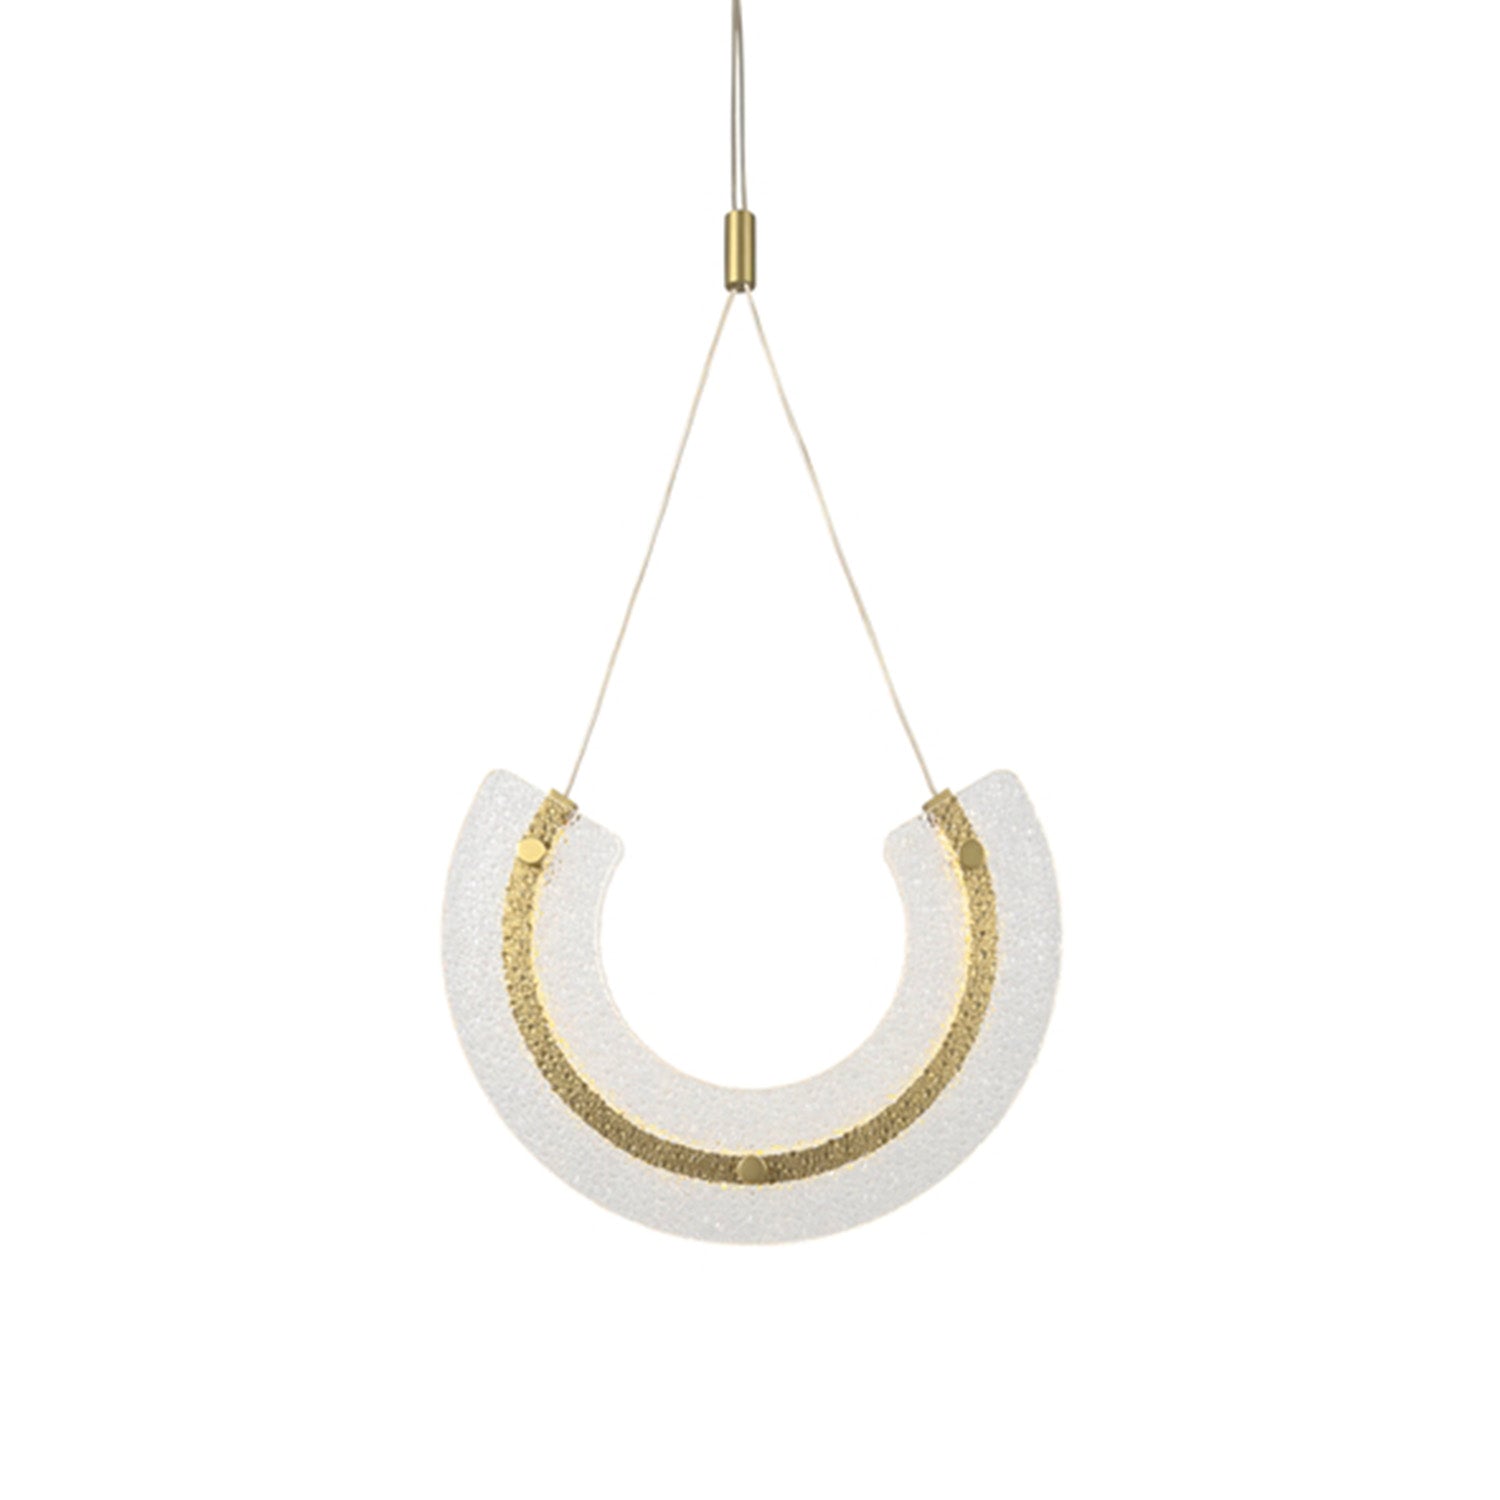 MAYA - Designer pendant light in gold steel and glass